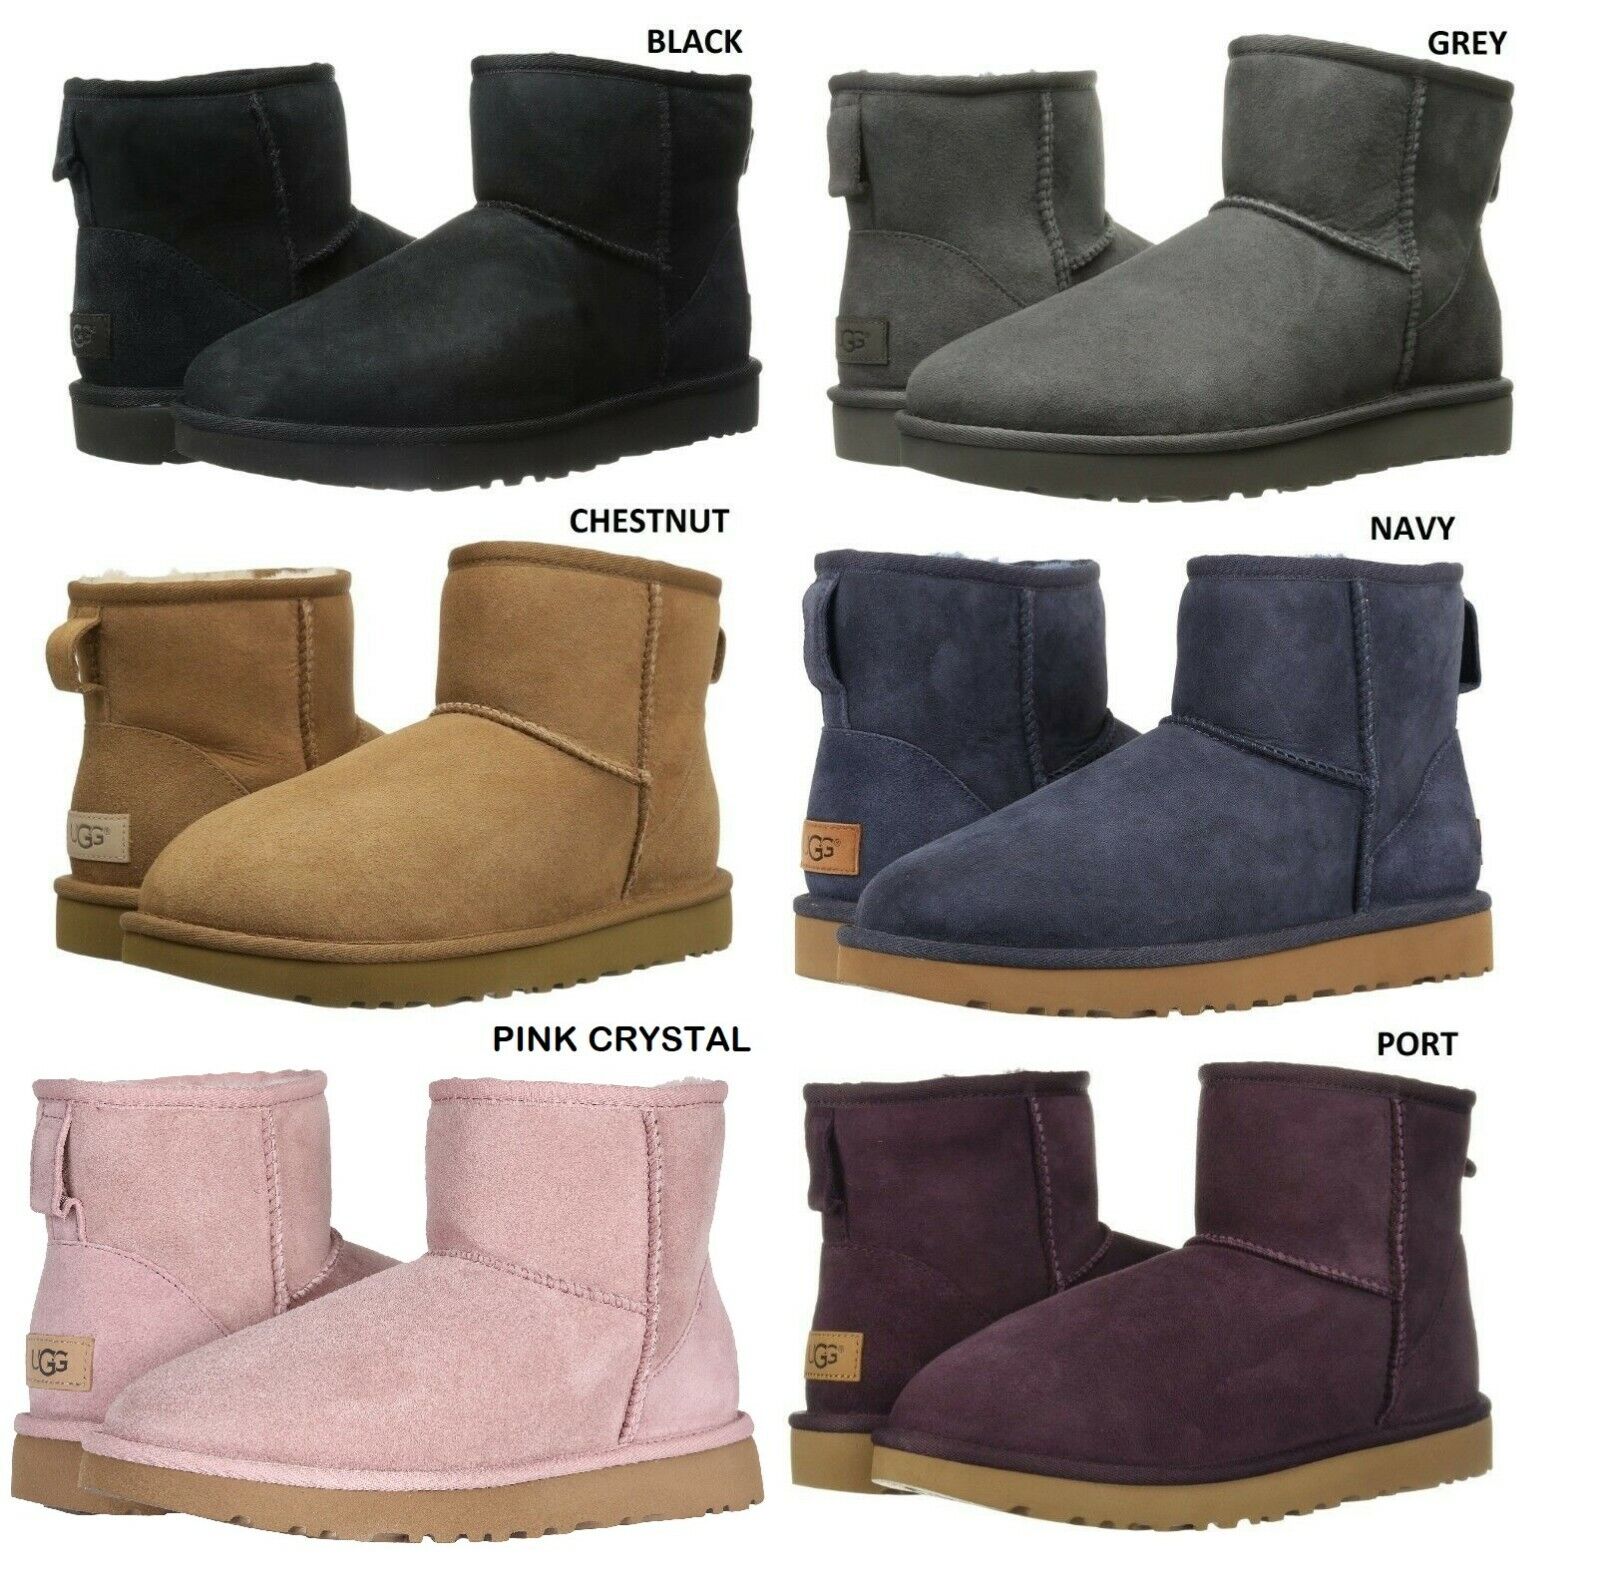 NEW 100% UGG Women's Classic Mini II Winter Boots Shoes Black Chestnut + UGG 1016222